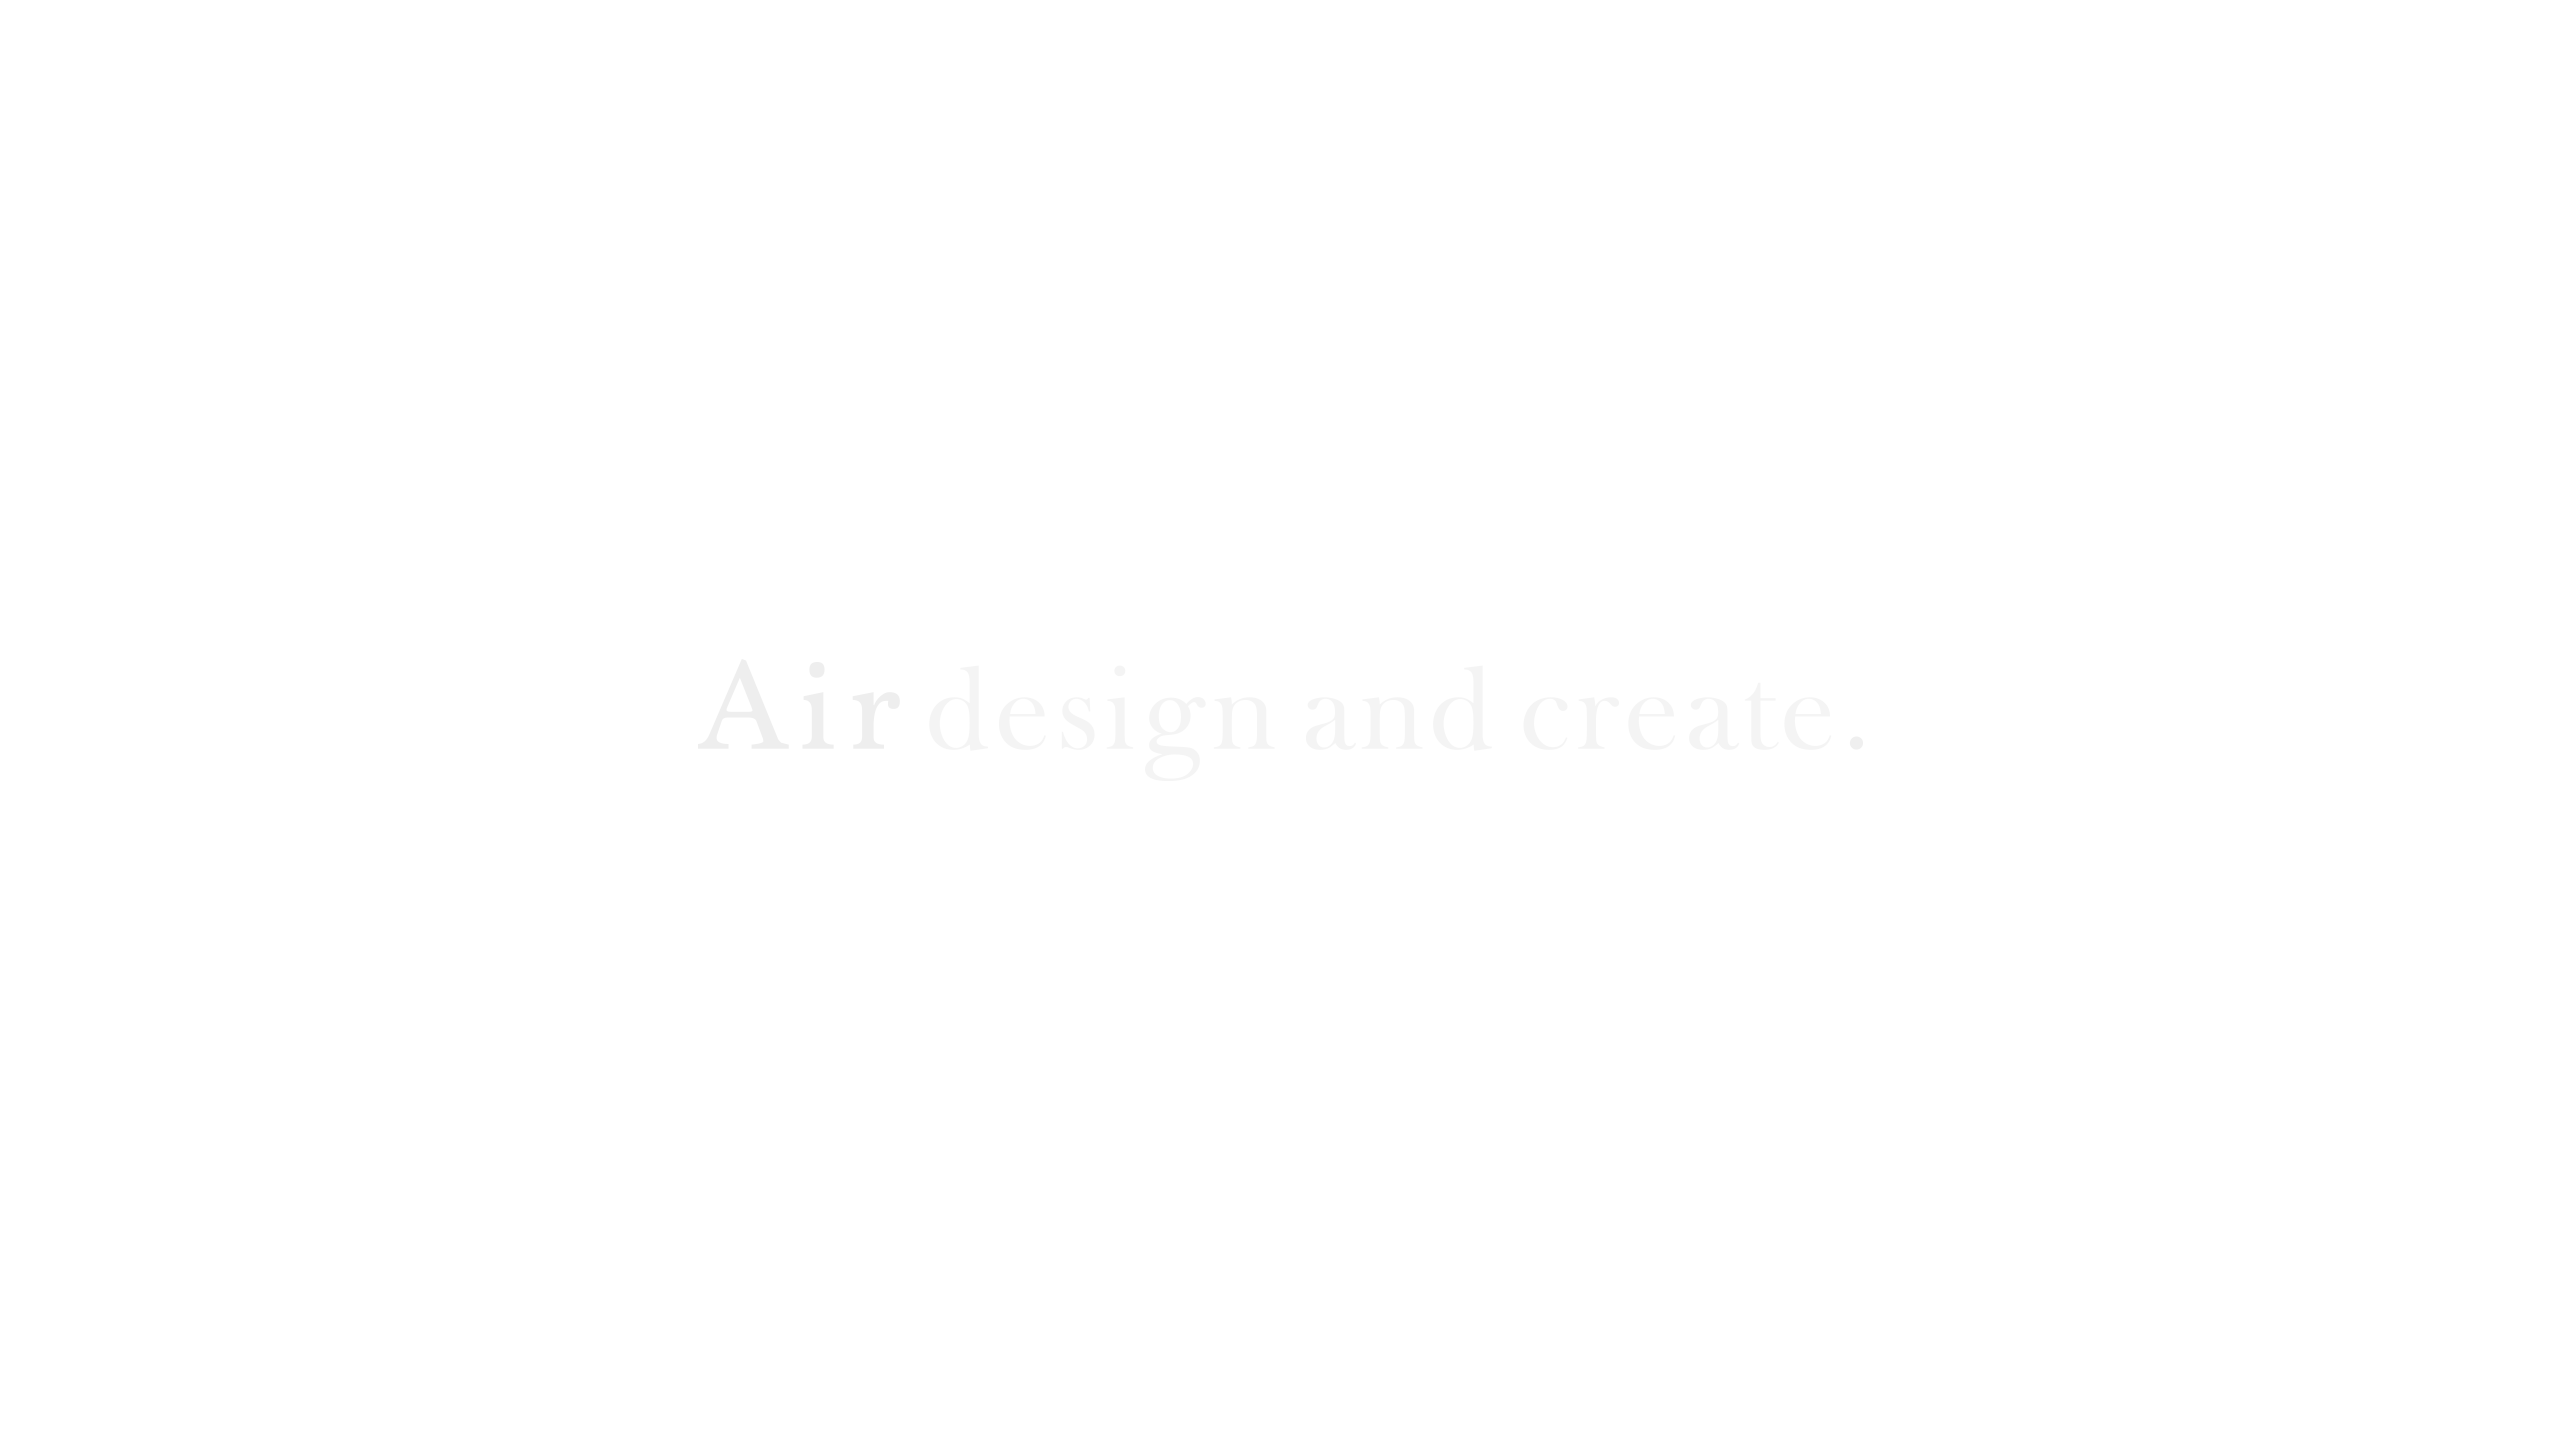 Air design and create